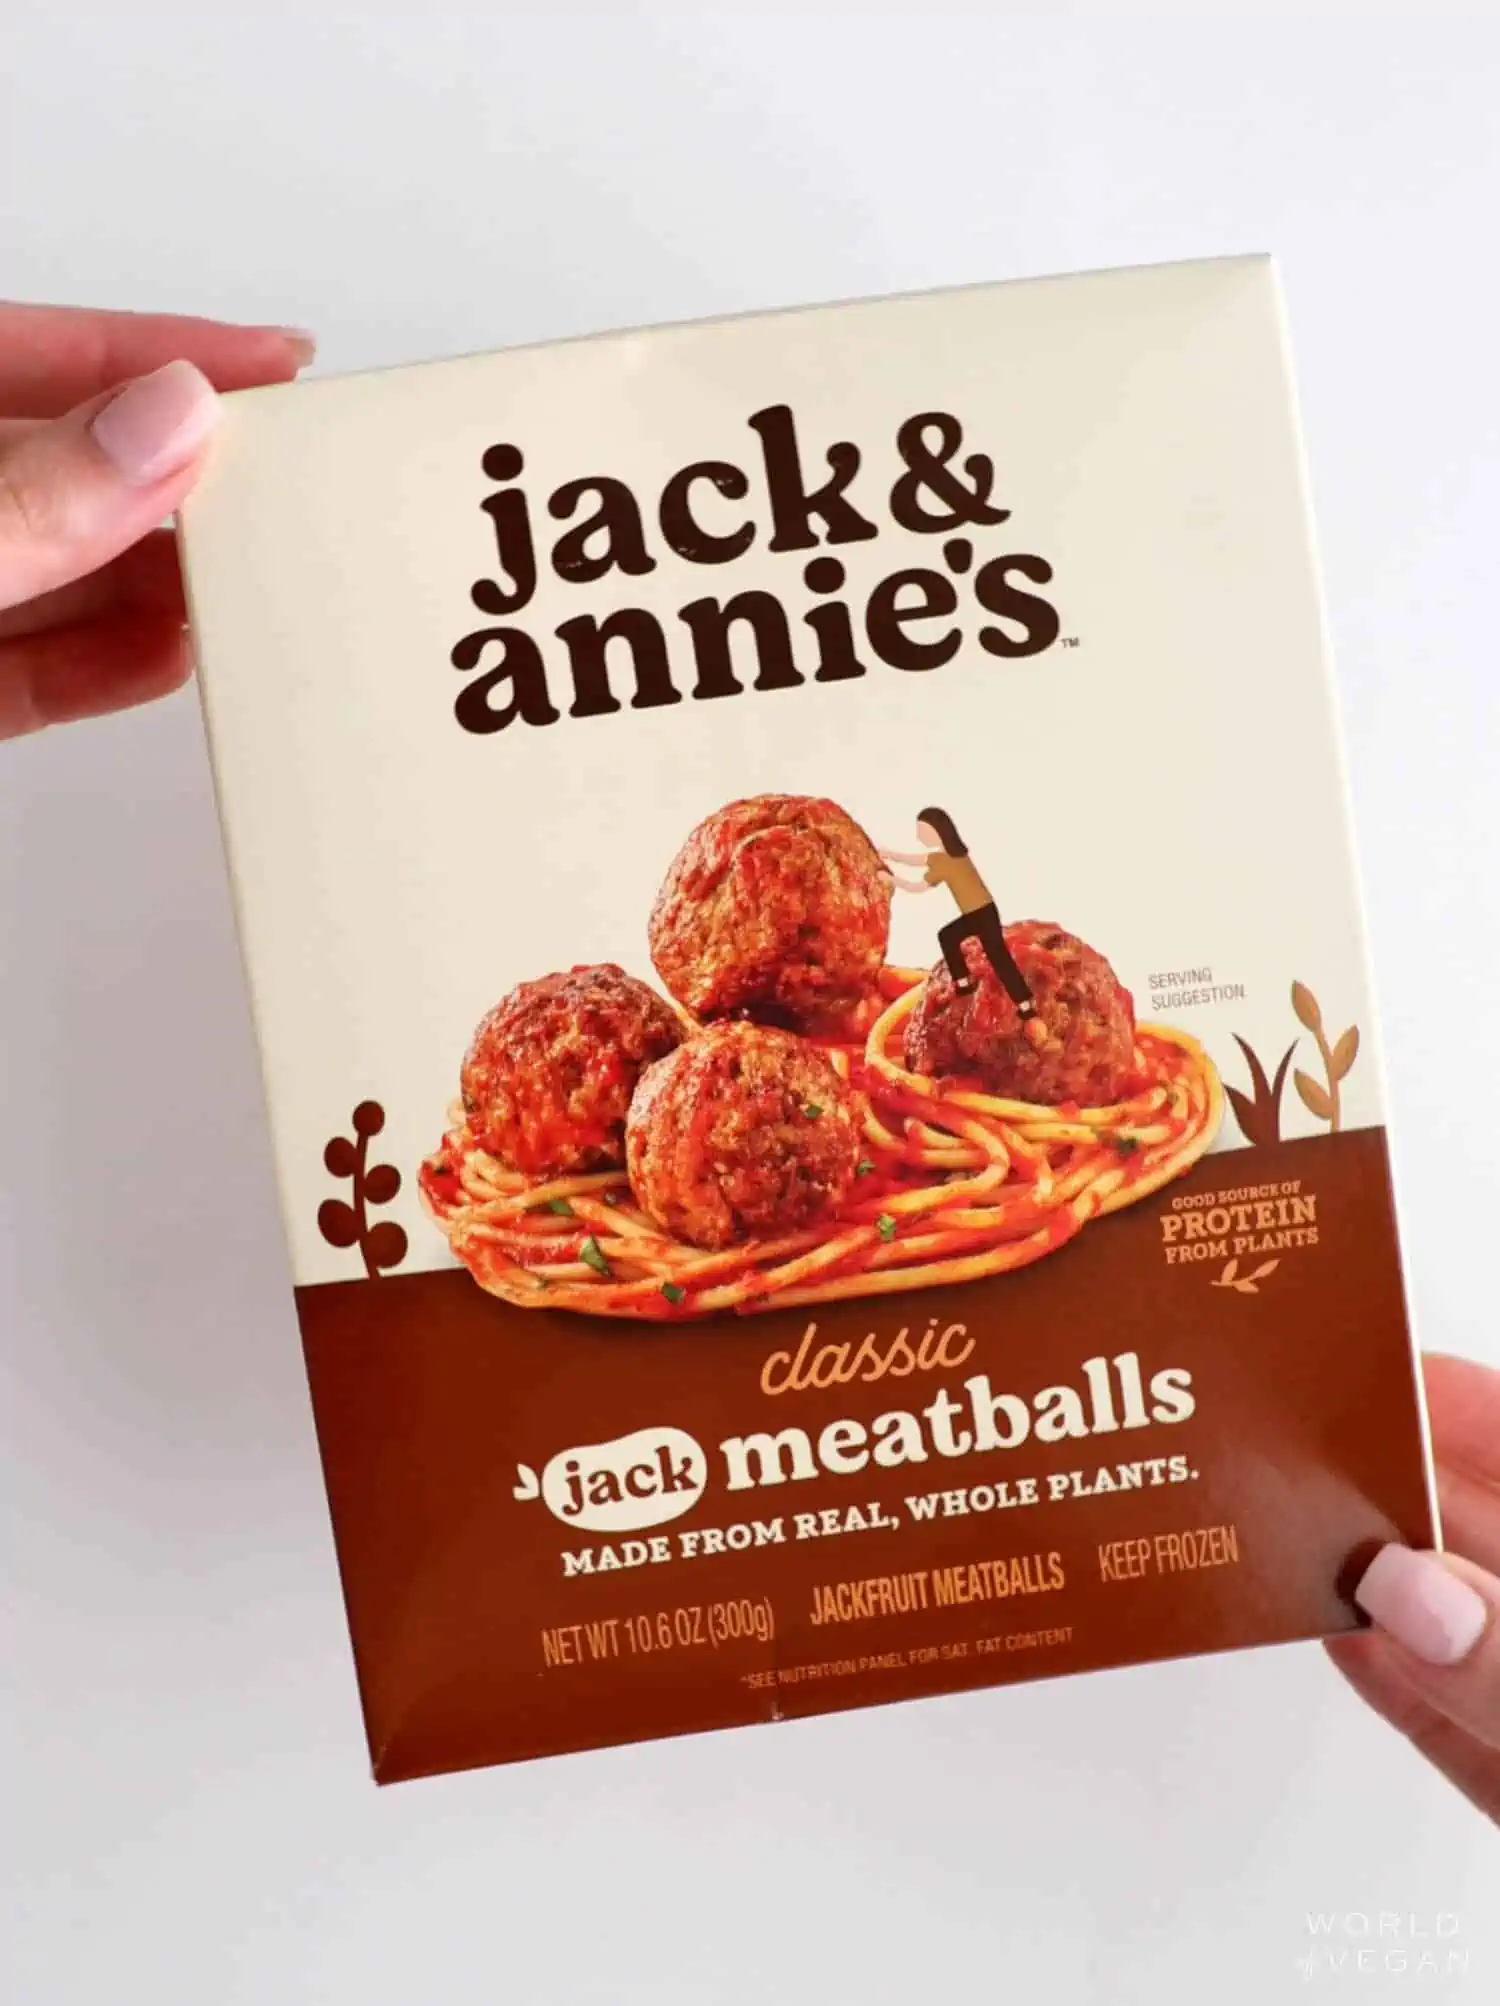 Box of jack and annies vegan jackfruit meatballs.